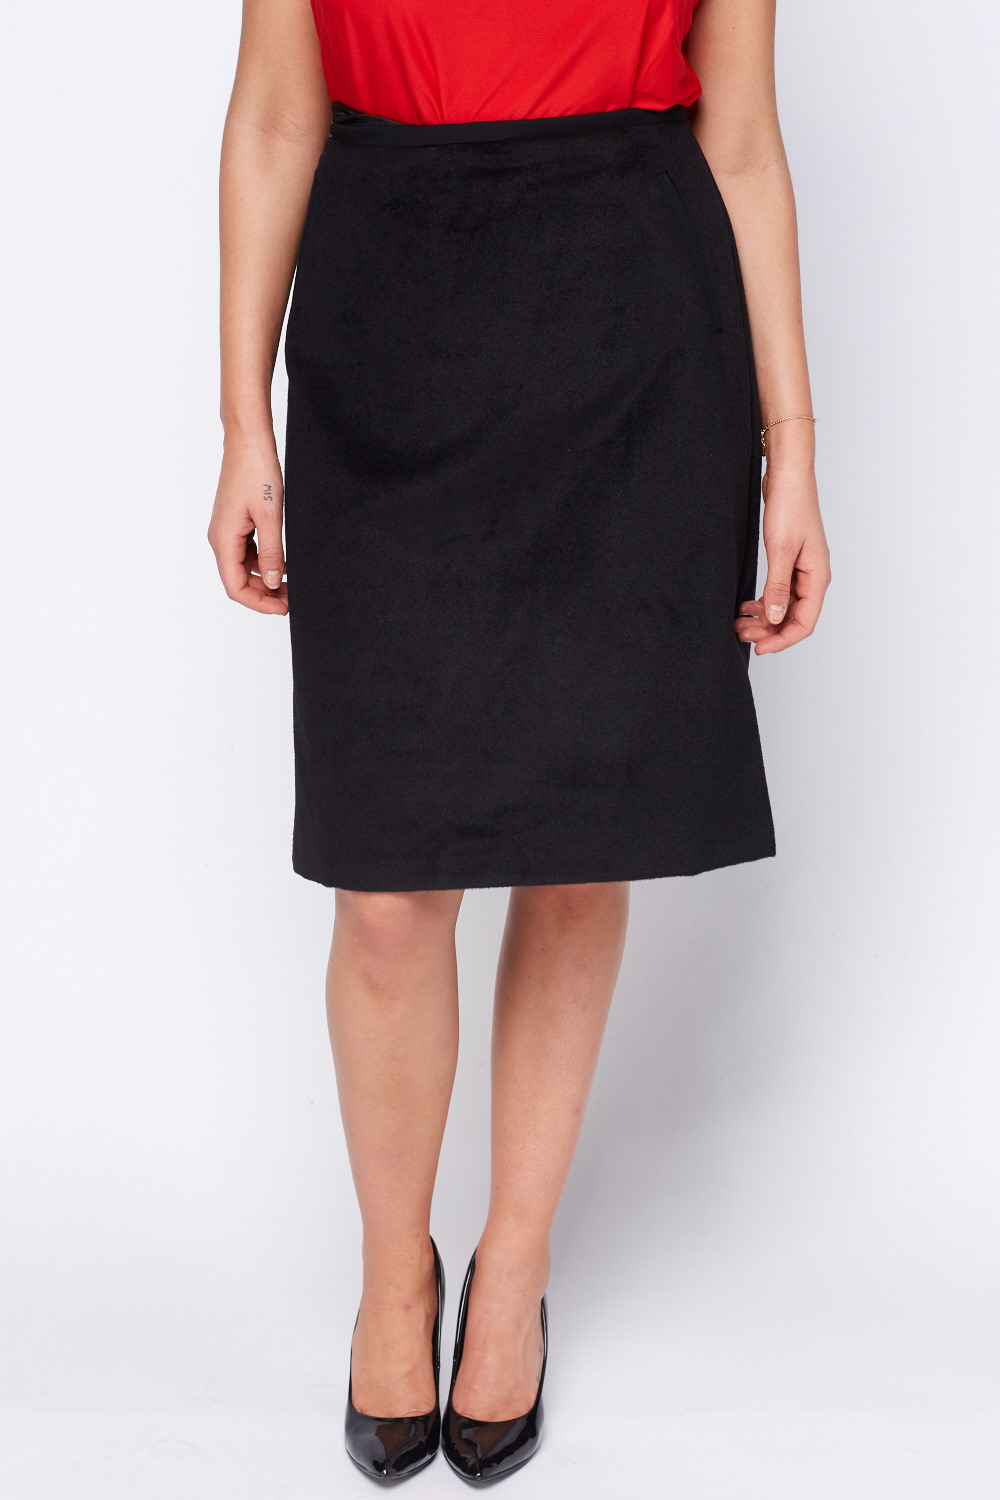 Fleece Woven Black Skirt - Just $7